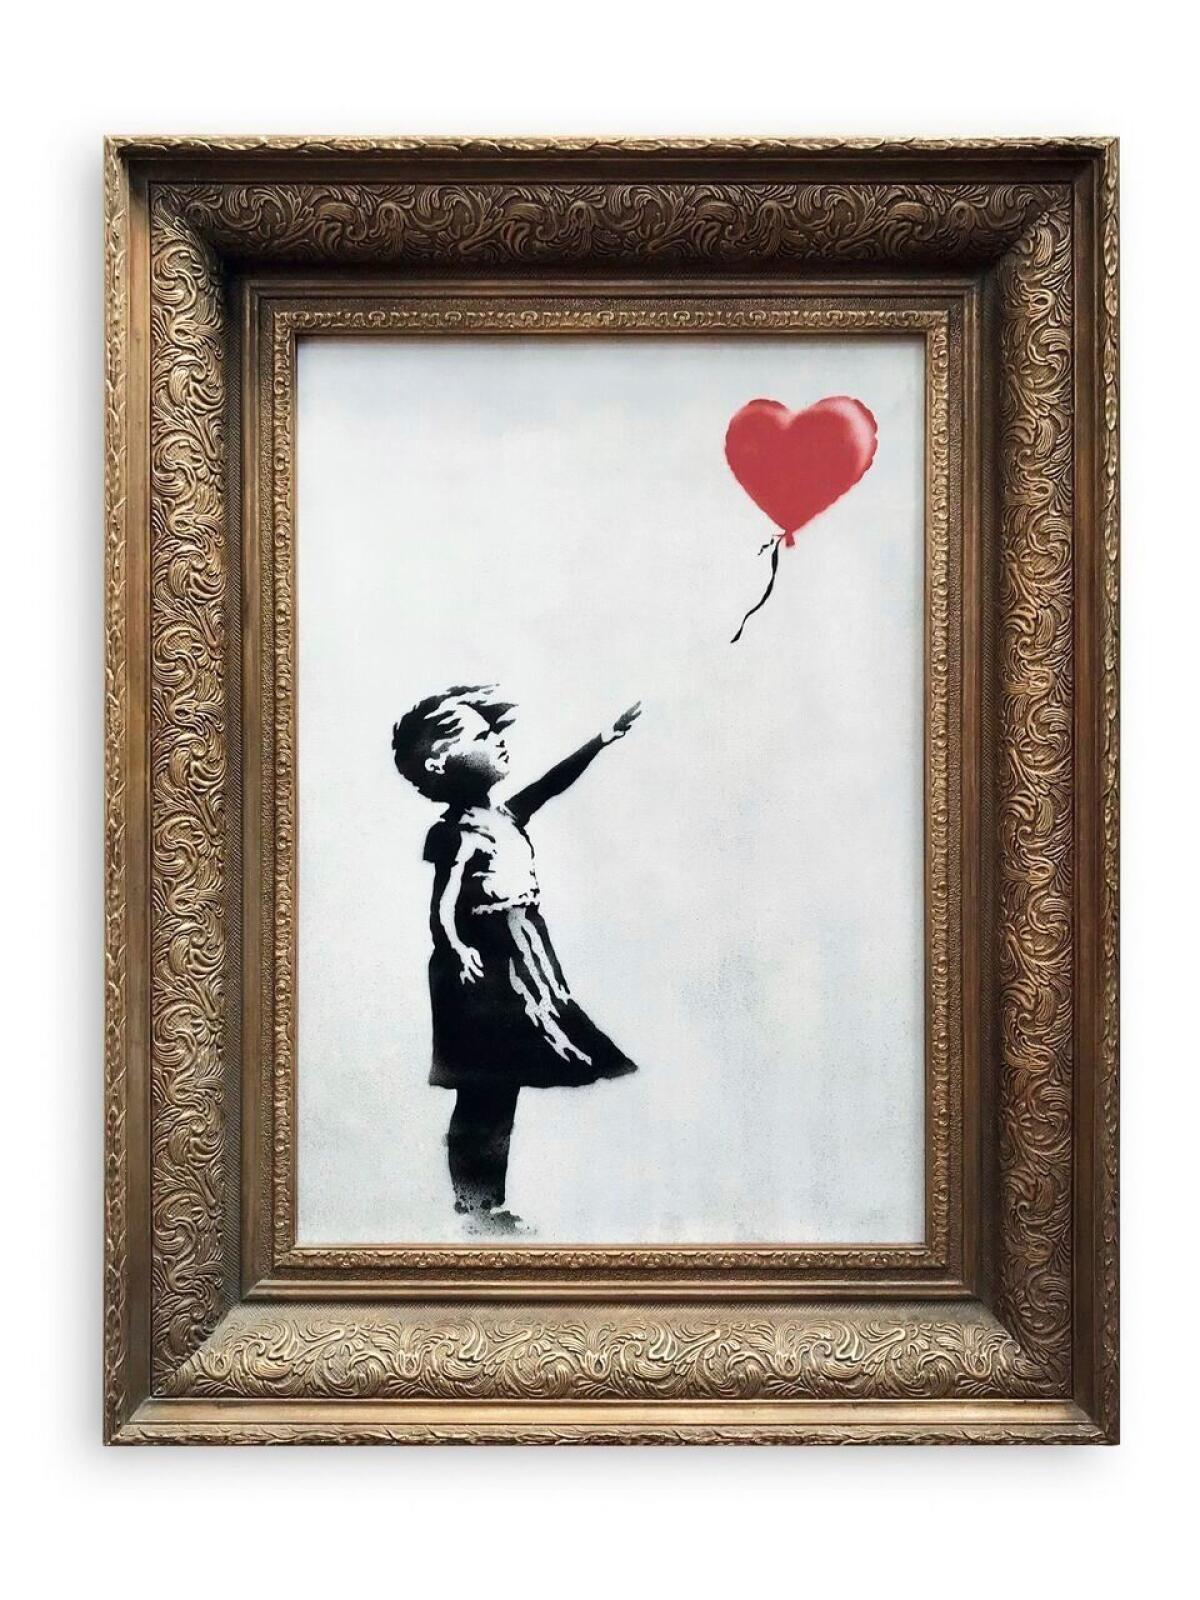 Banksy, "Girl with Balloon," 2006, mixed media